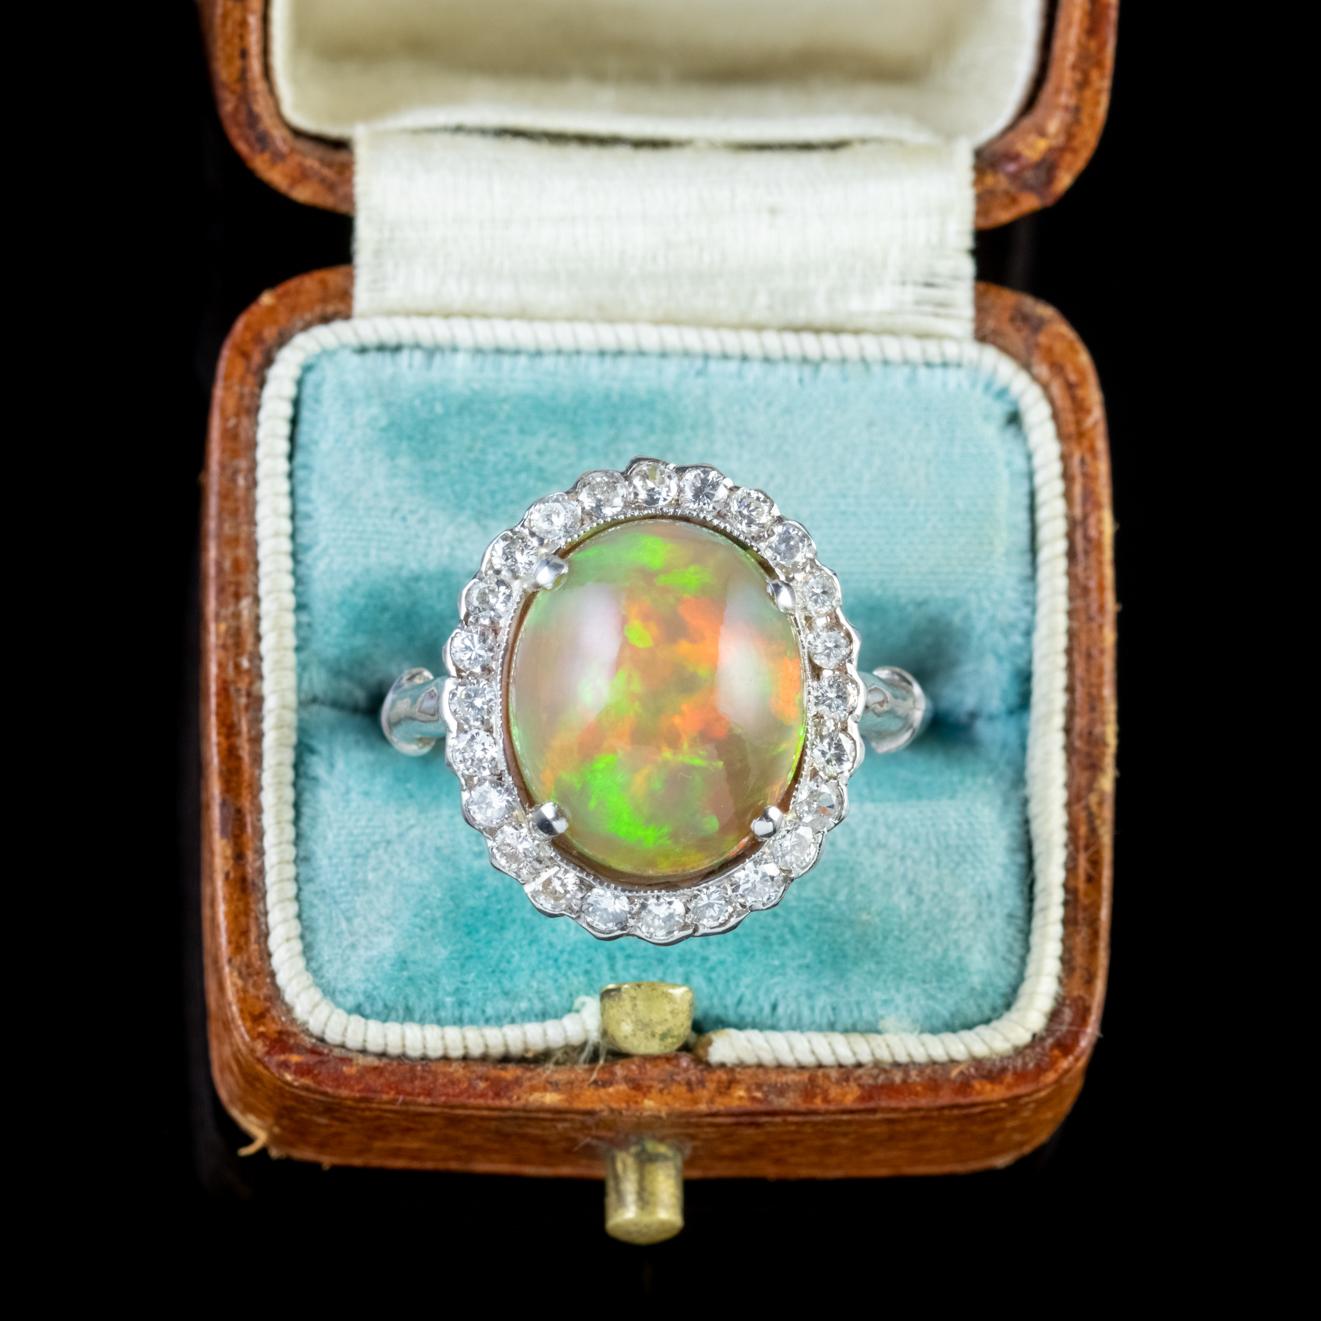 Antique Edwardian Opal Diamond Ring Platinum 6 Carat Natural Opal, circa 1910 For Sale 2